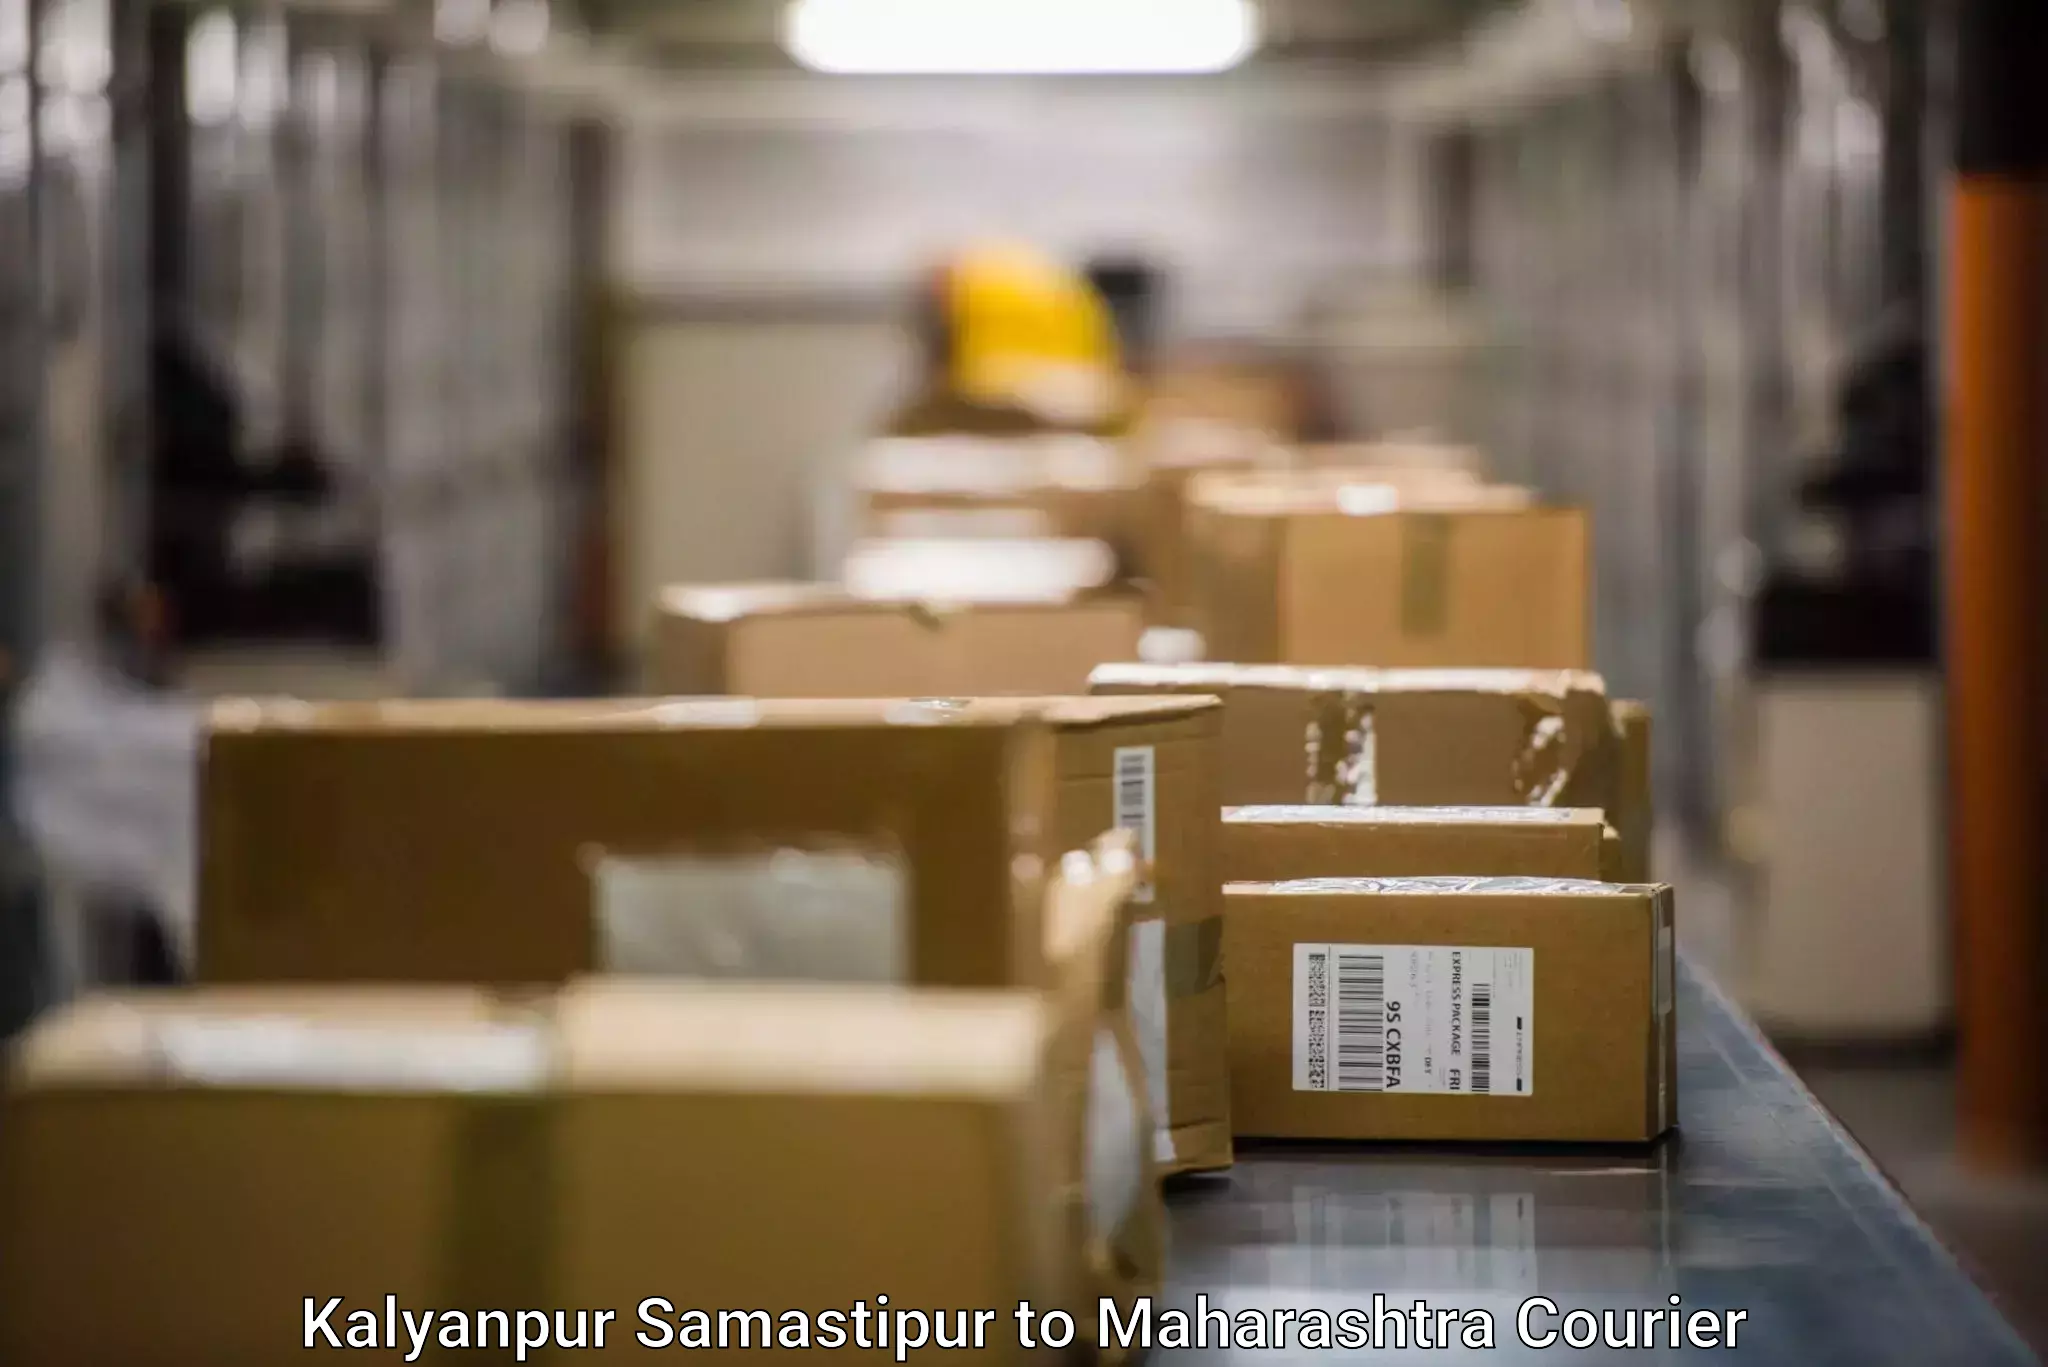 Modern courier technology Kalyanpur Samastipur to Kolhapur